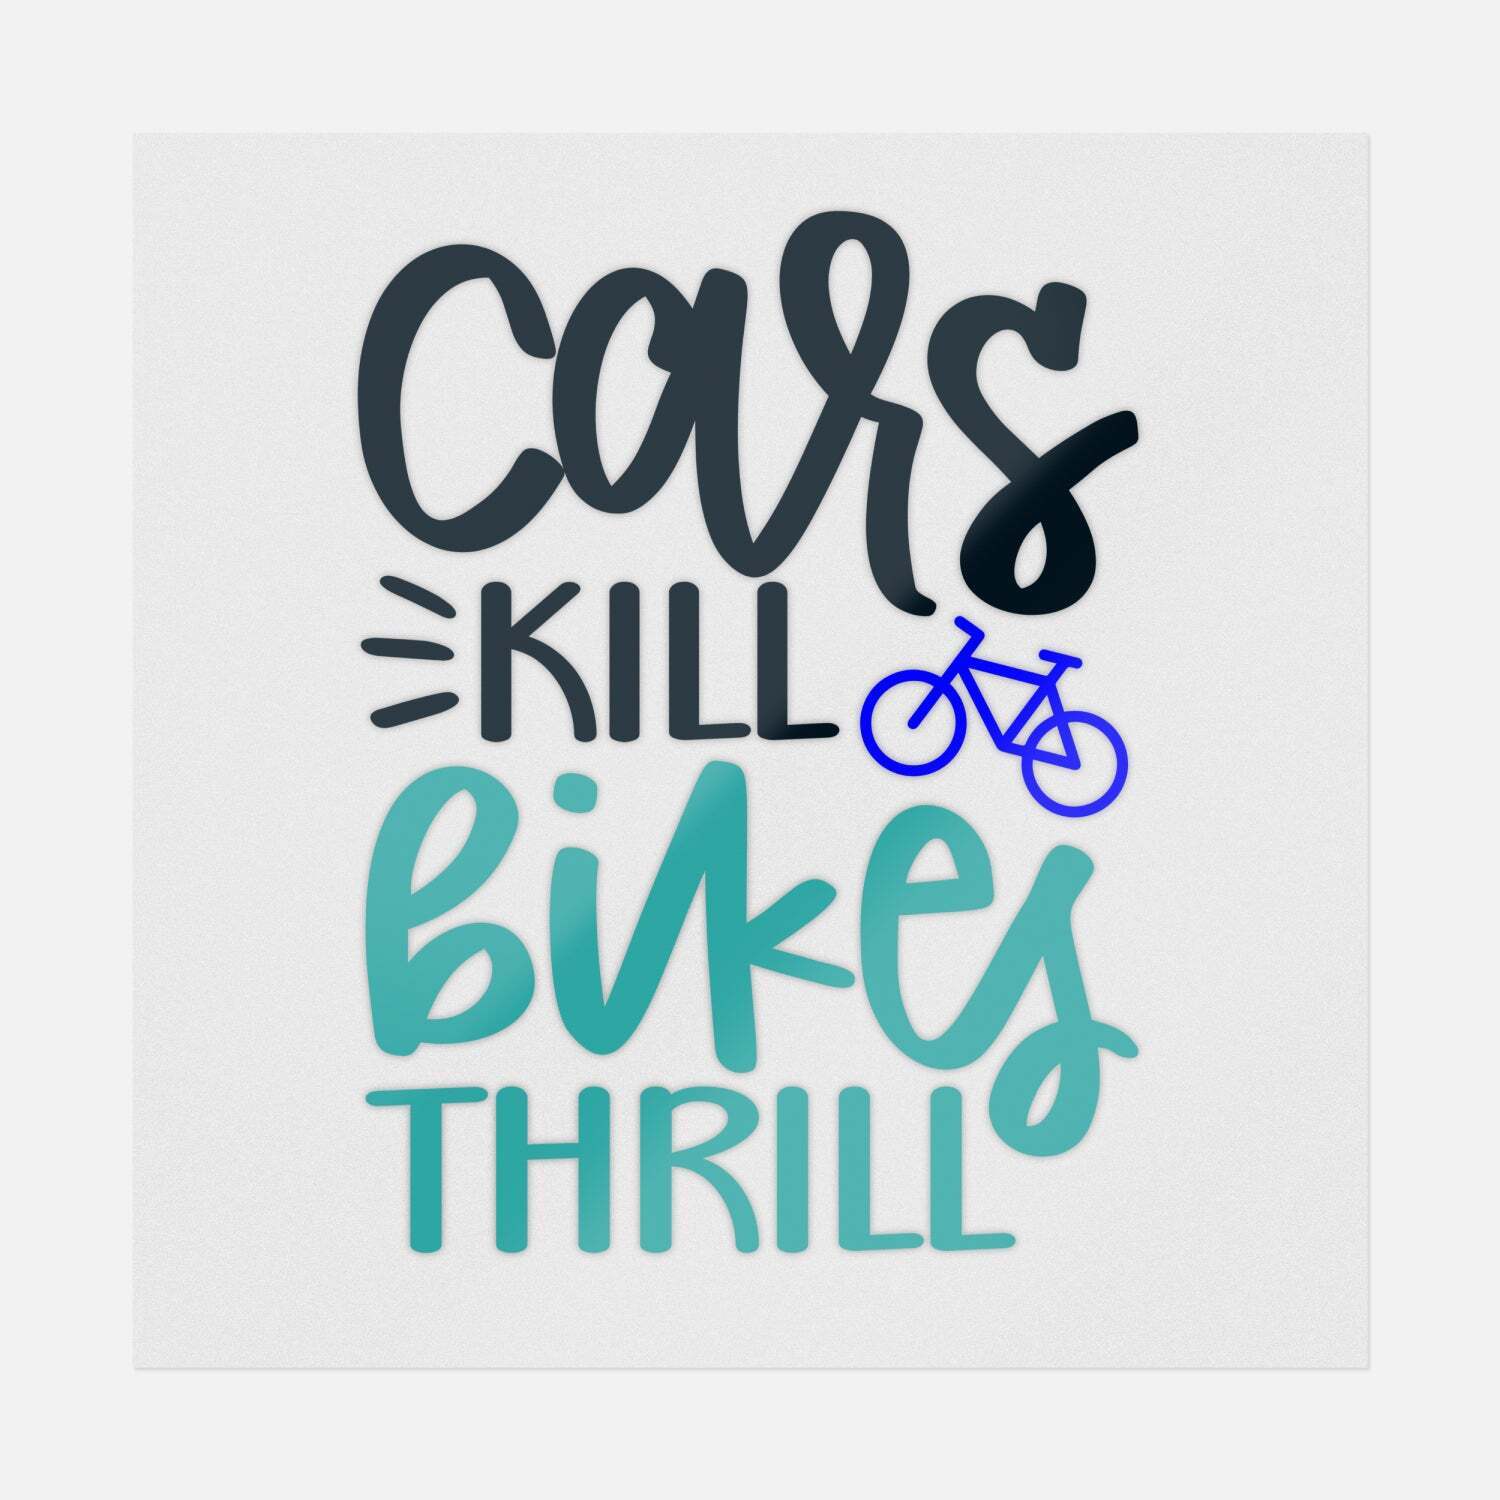 Cars Kill Bikes Thrill Transfer